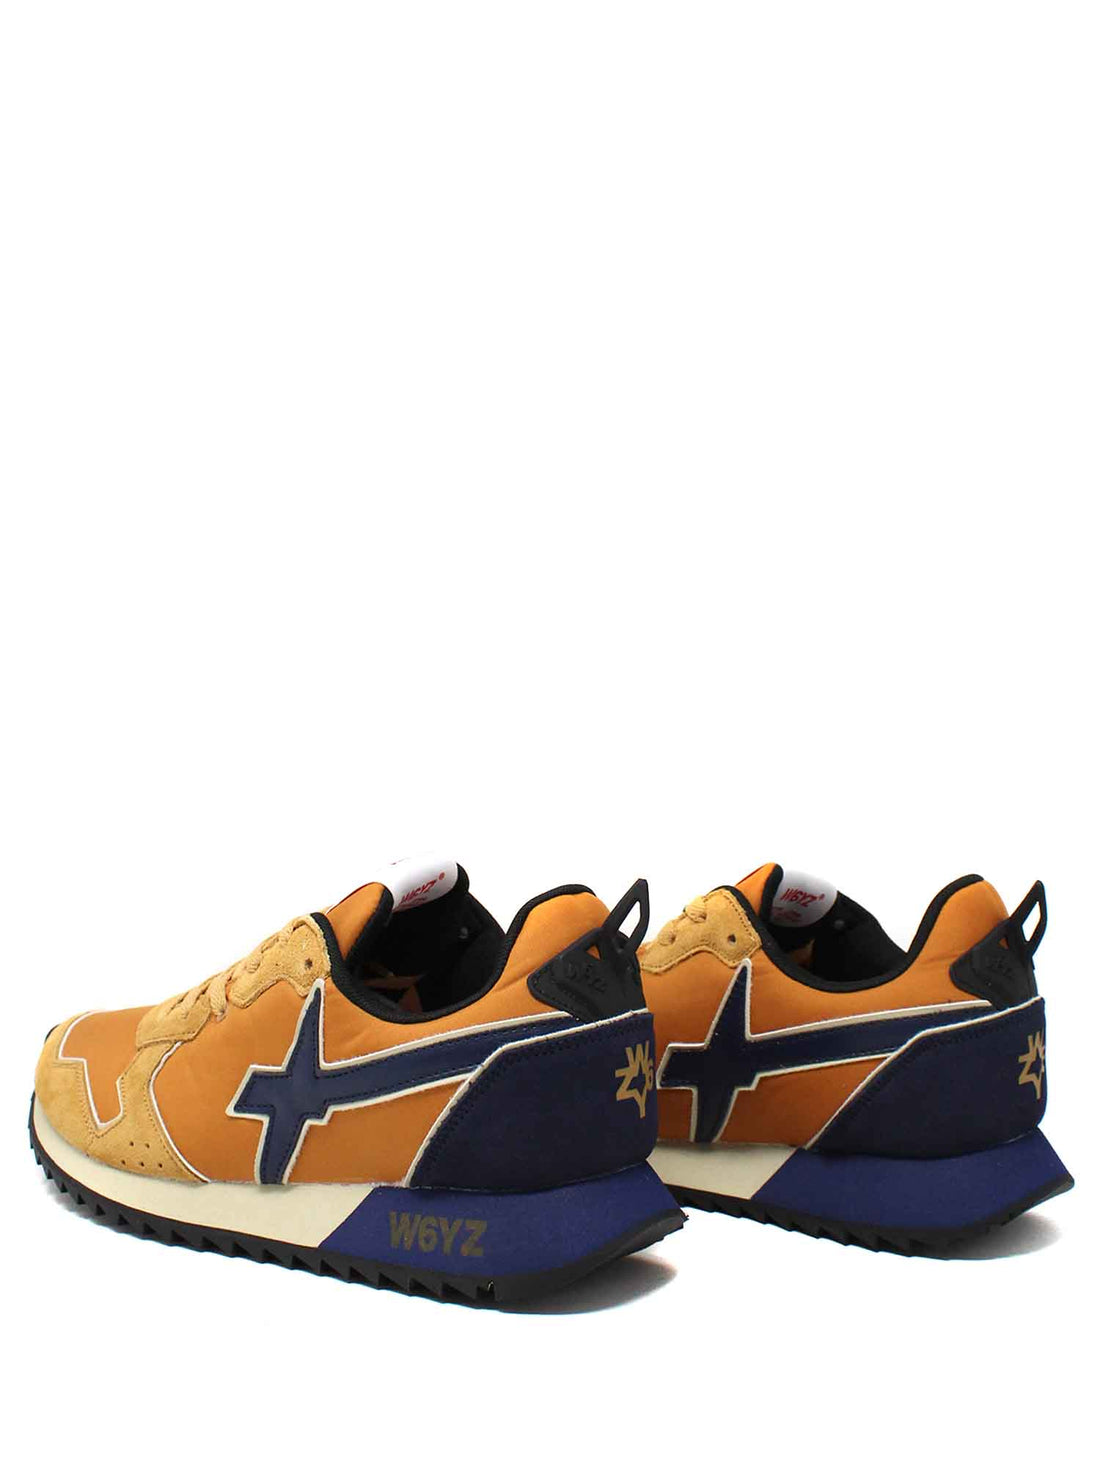 Sneakers Arancio 1g02 W6yz